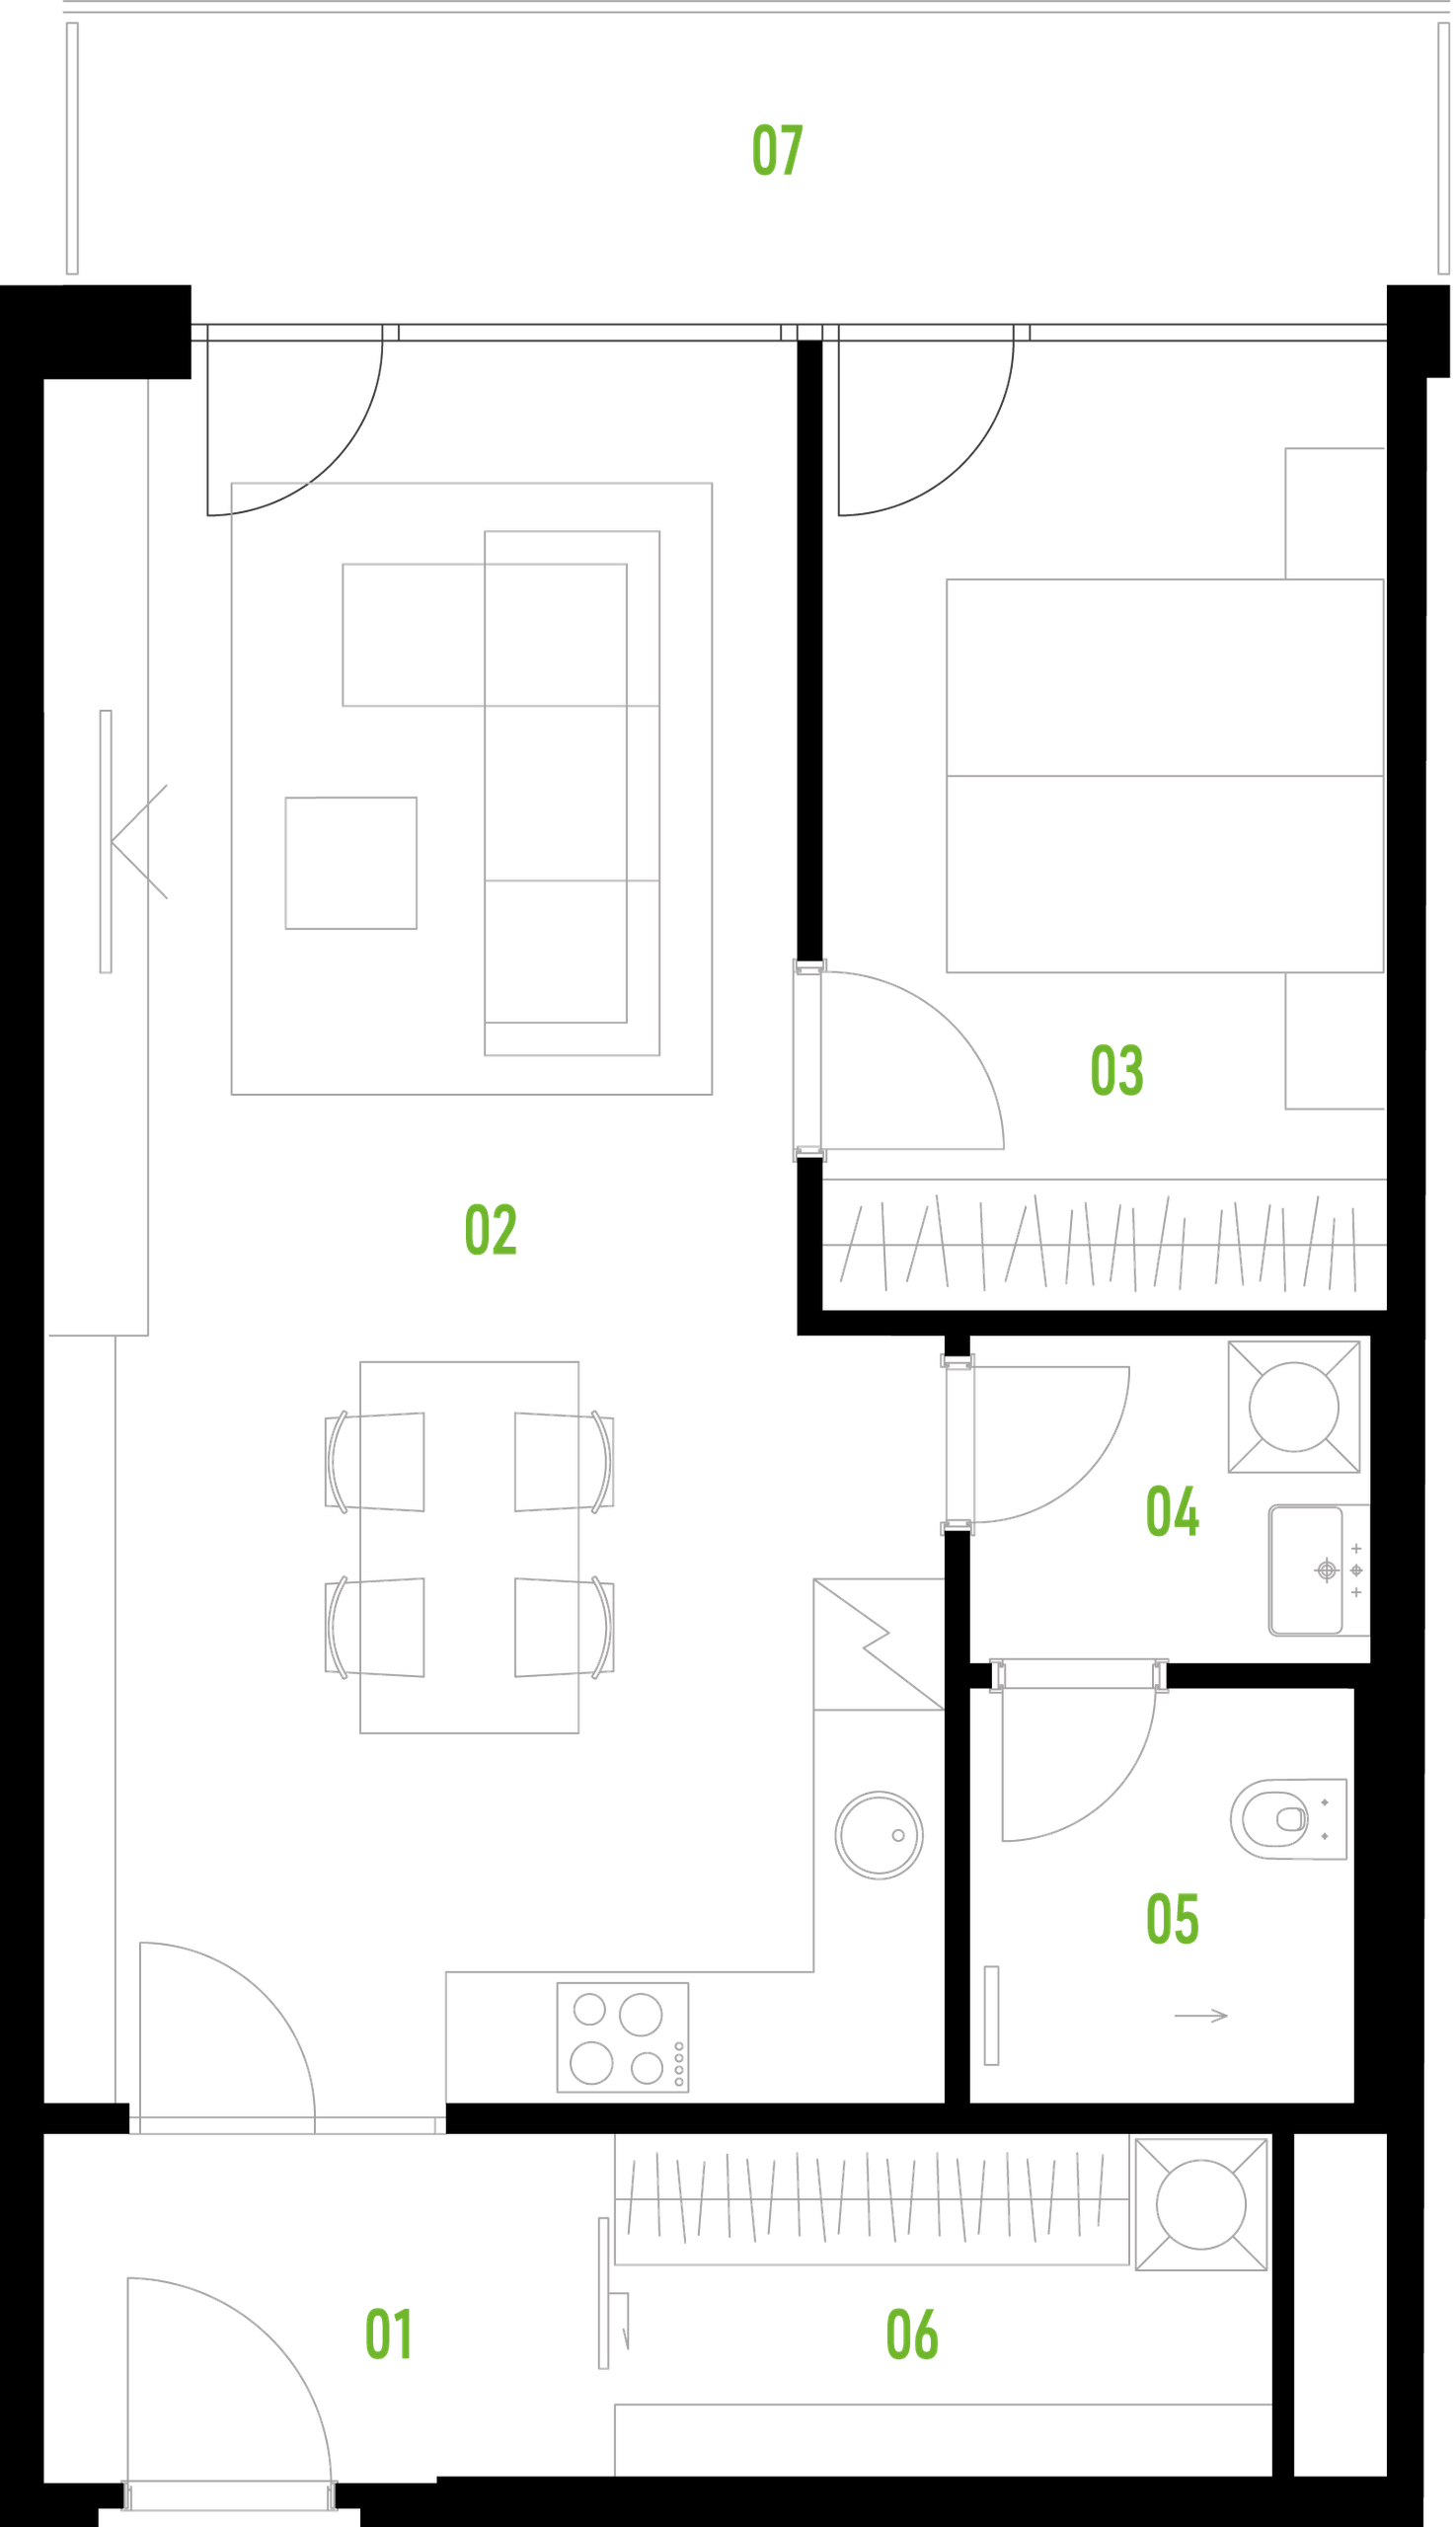 A24 floor plan